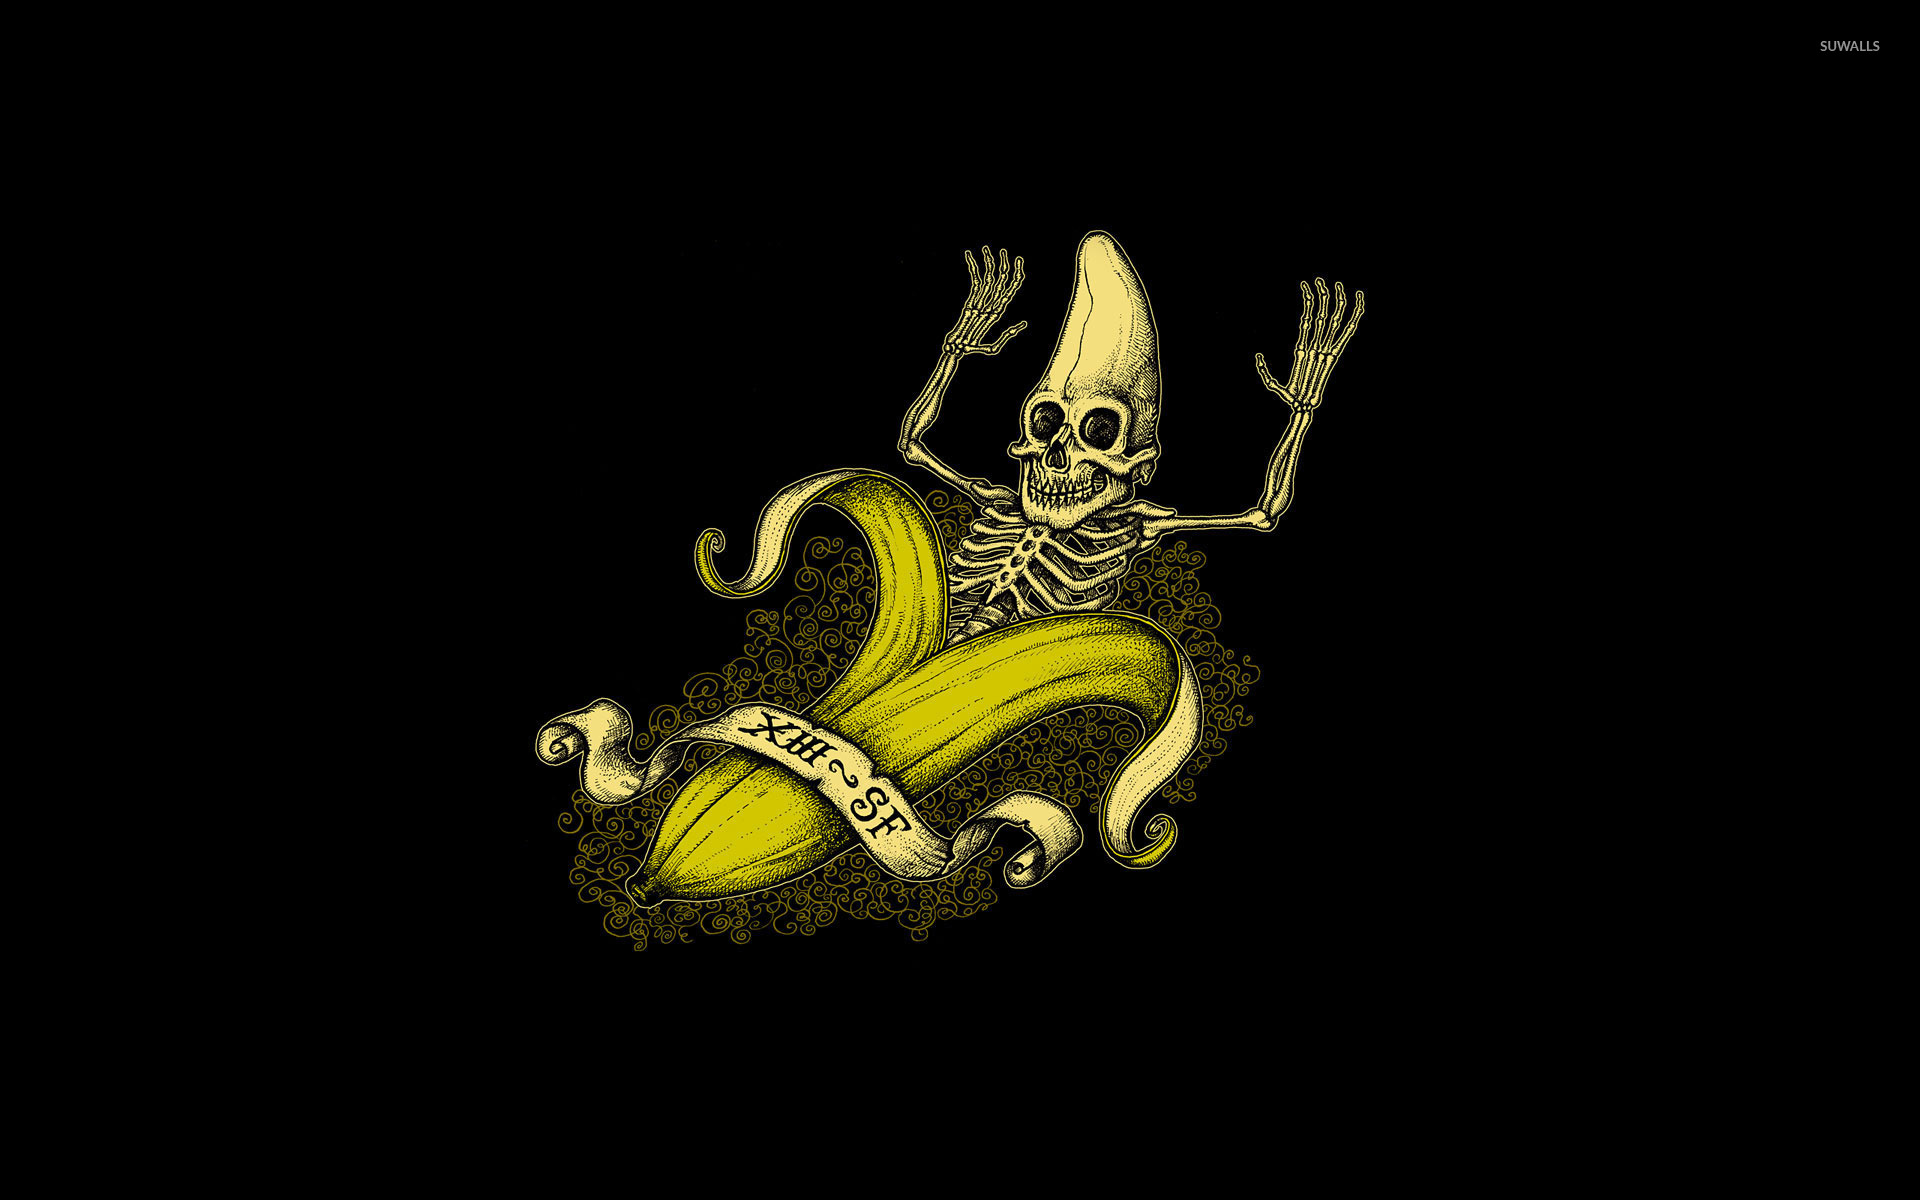 Banana skeleton wallpaper - Funny